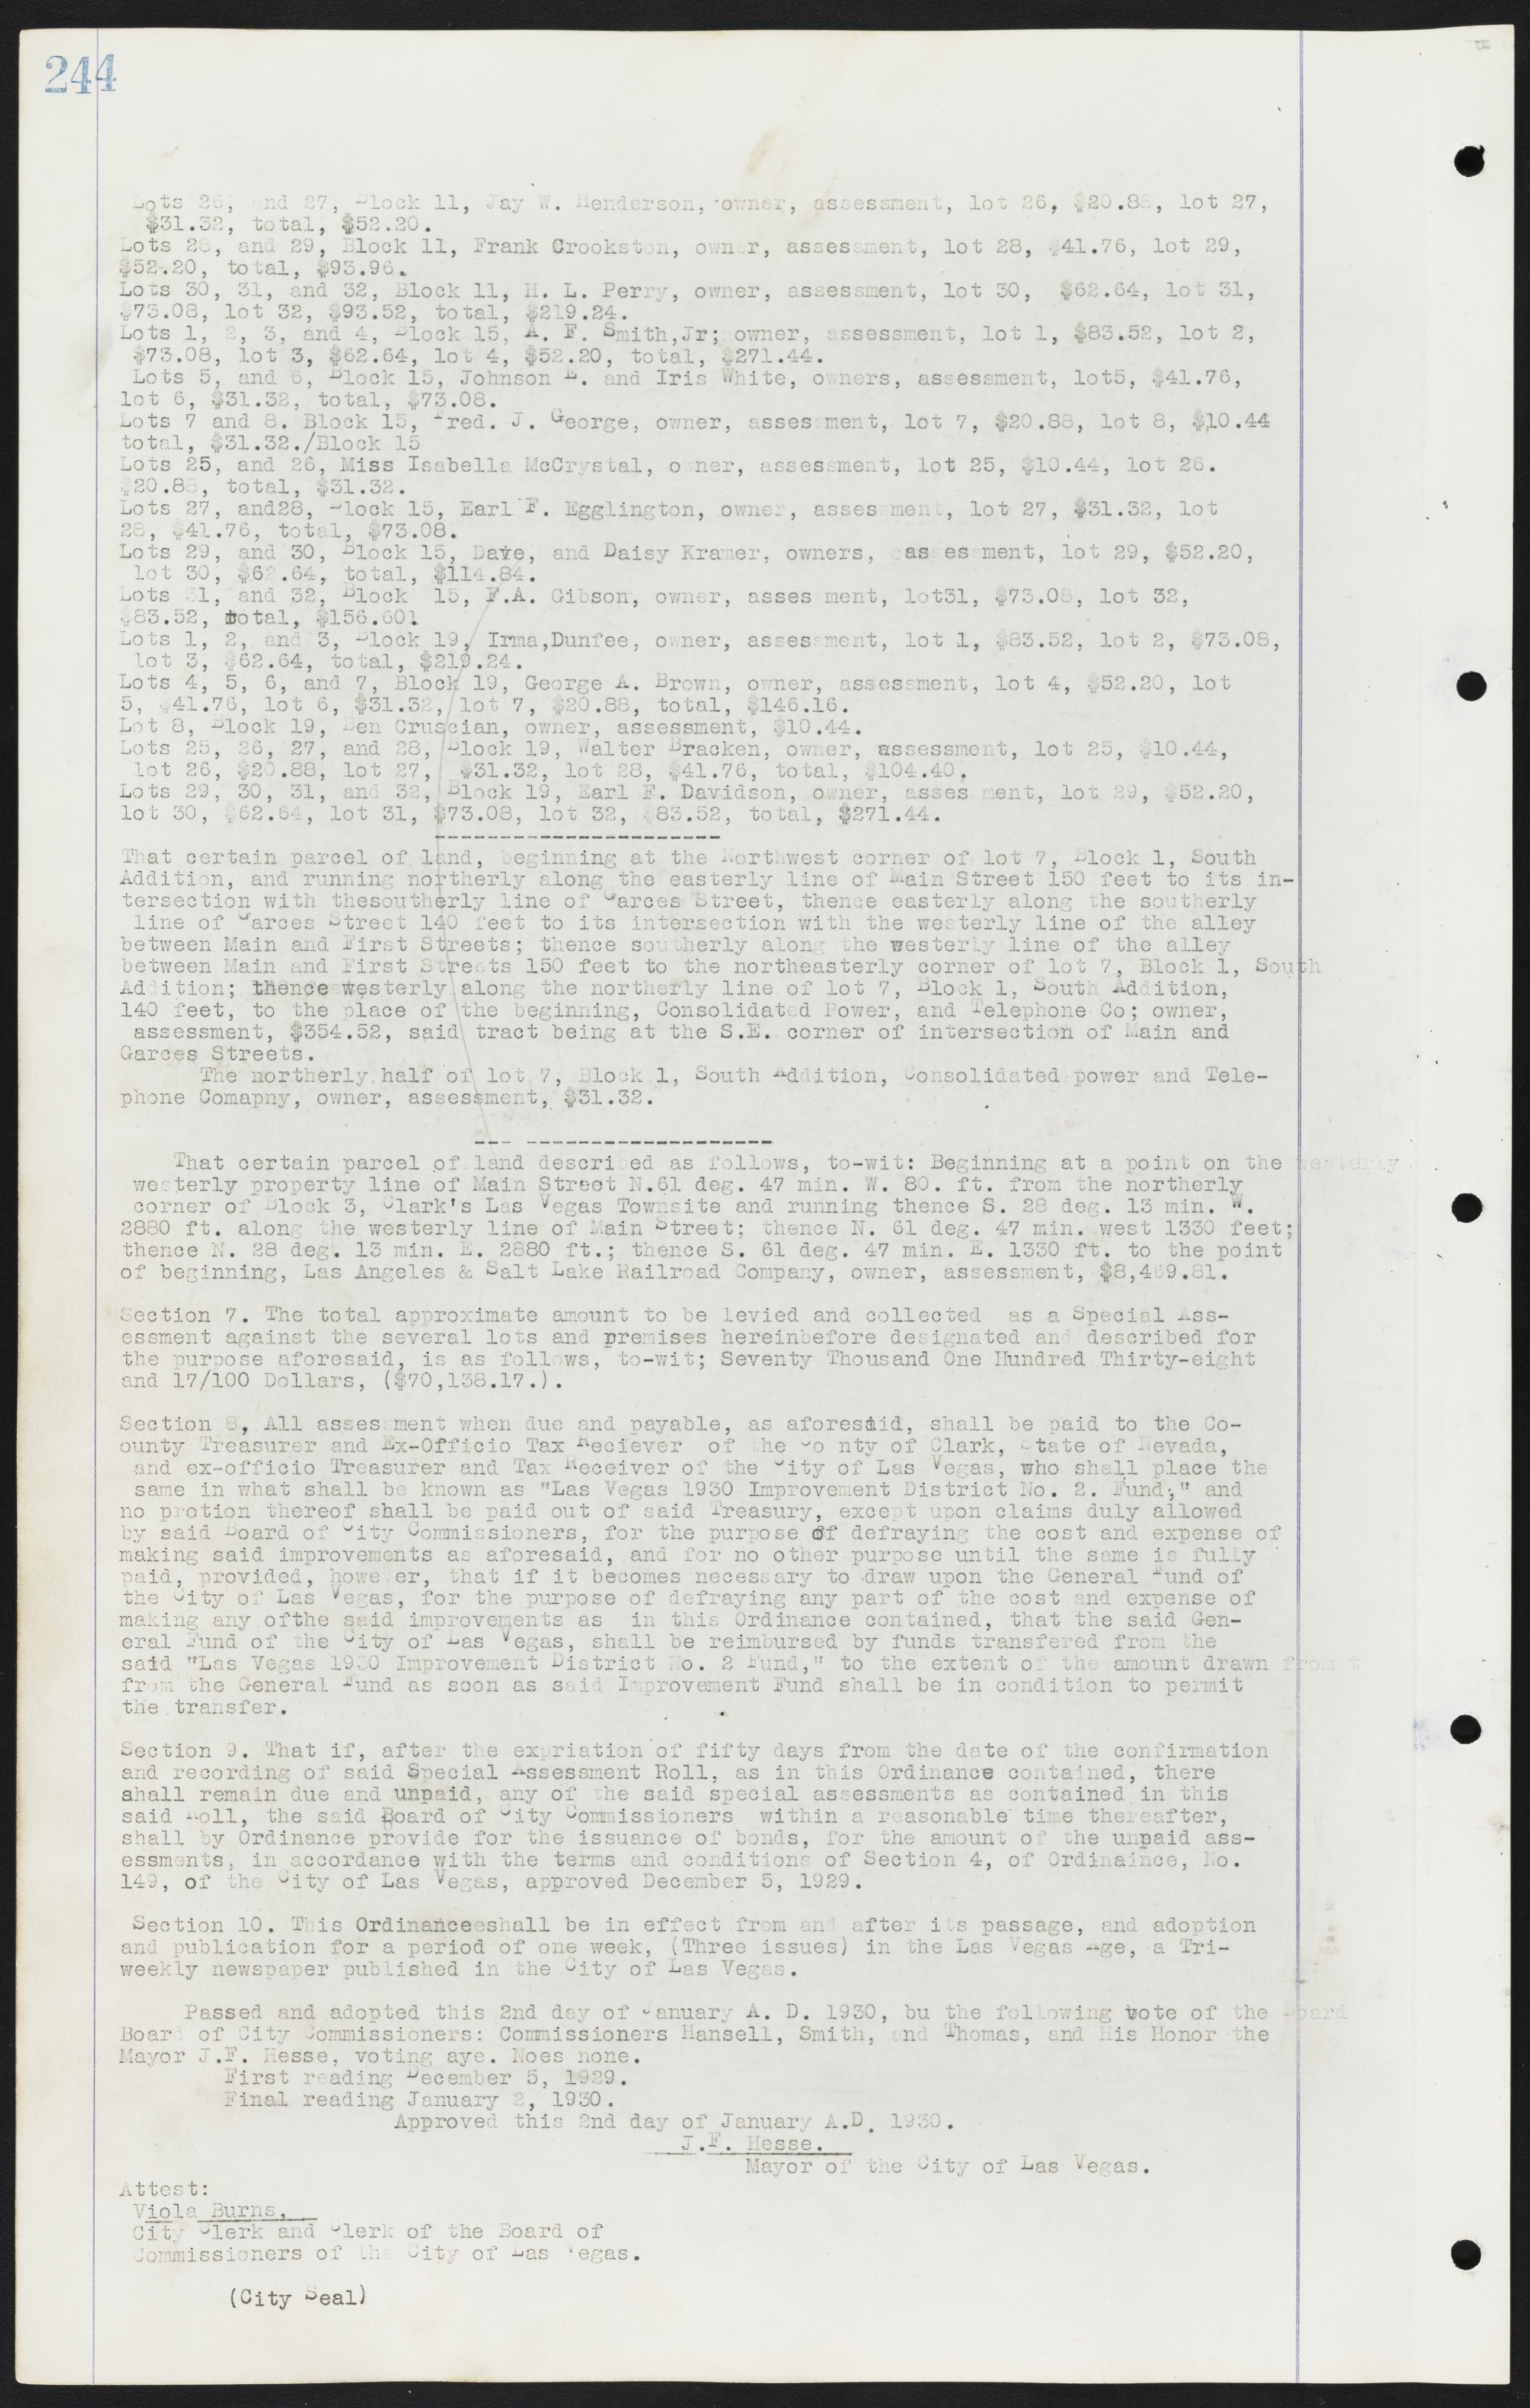 Las Vegas City Ordinances, July 18, 1911 to March 31, 1933, lvc000013-248